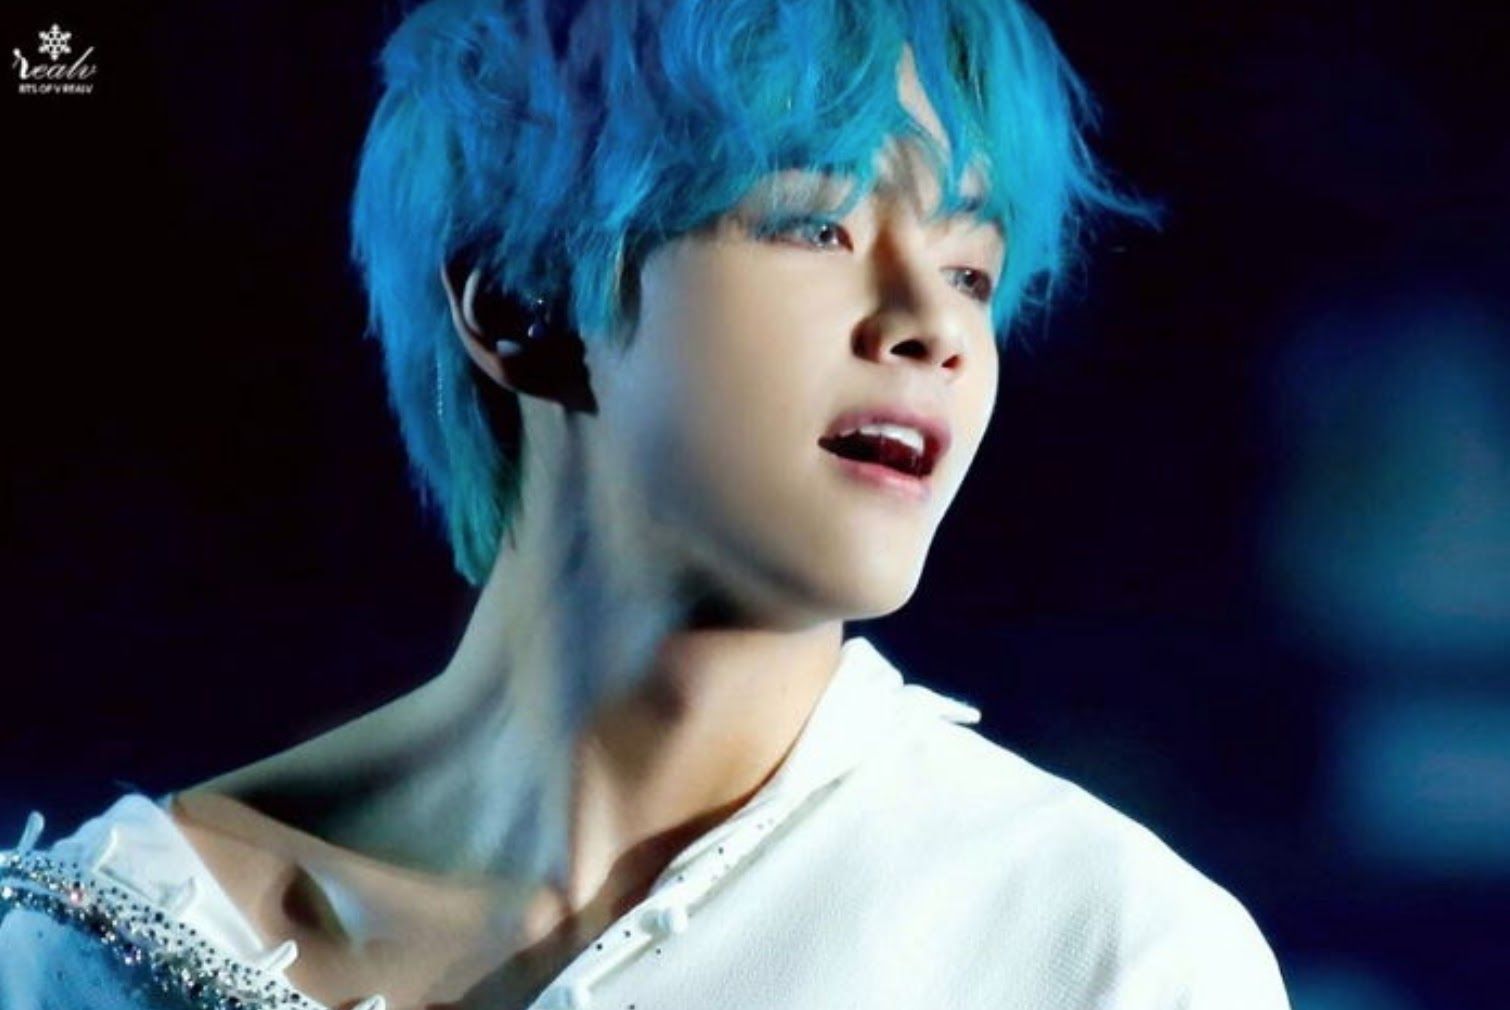 Blue hair boy BTS V - wide 9